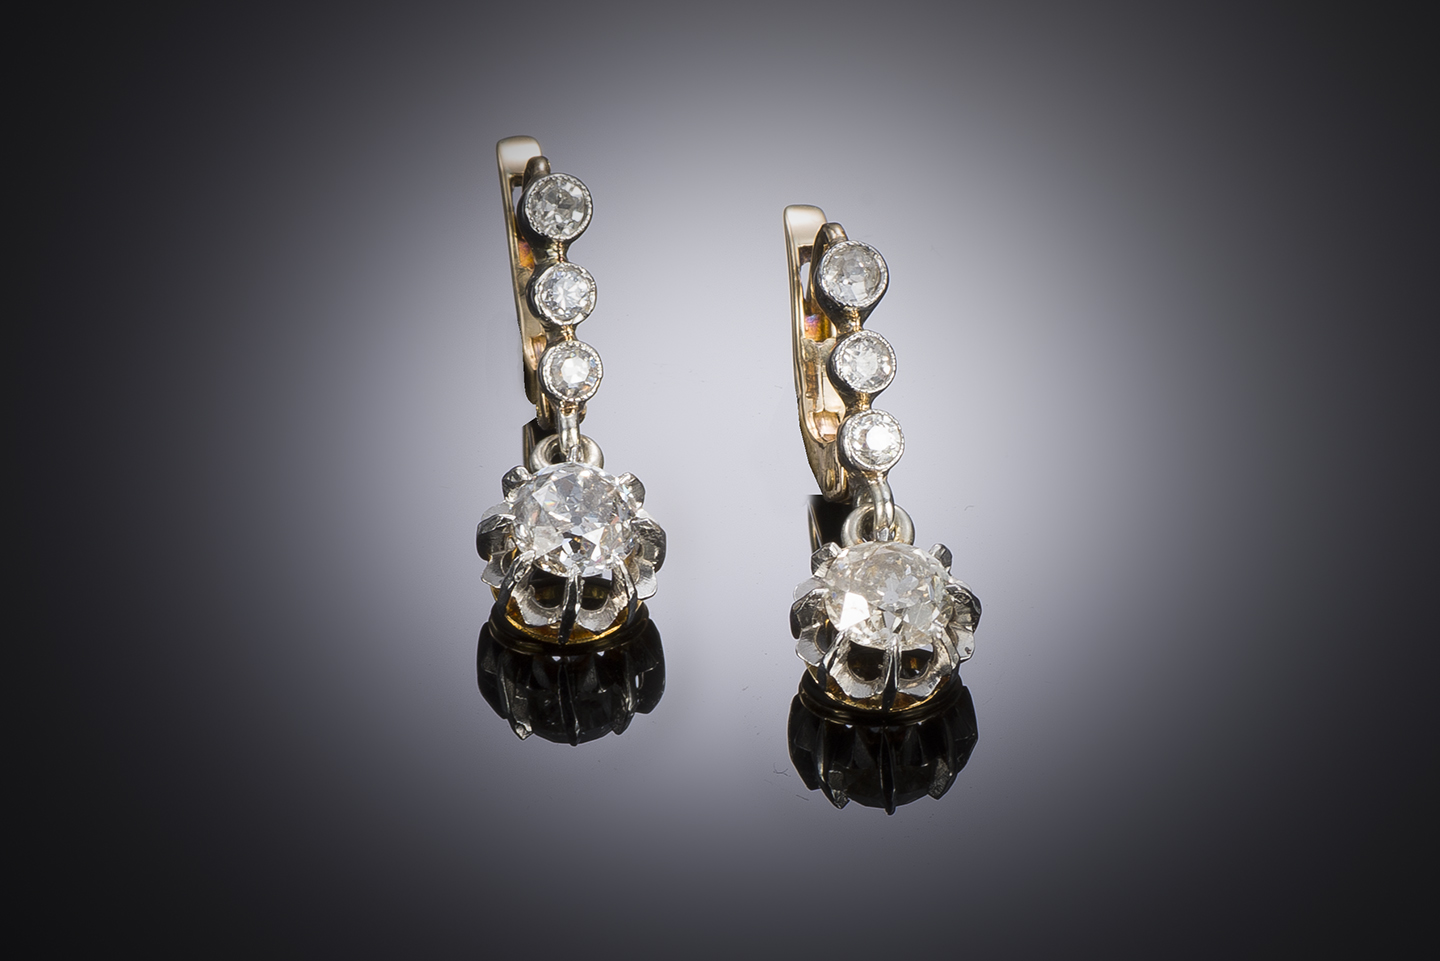 French late 19th century diamond earrings (1.60 carat)-1